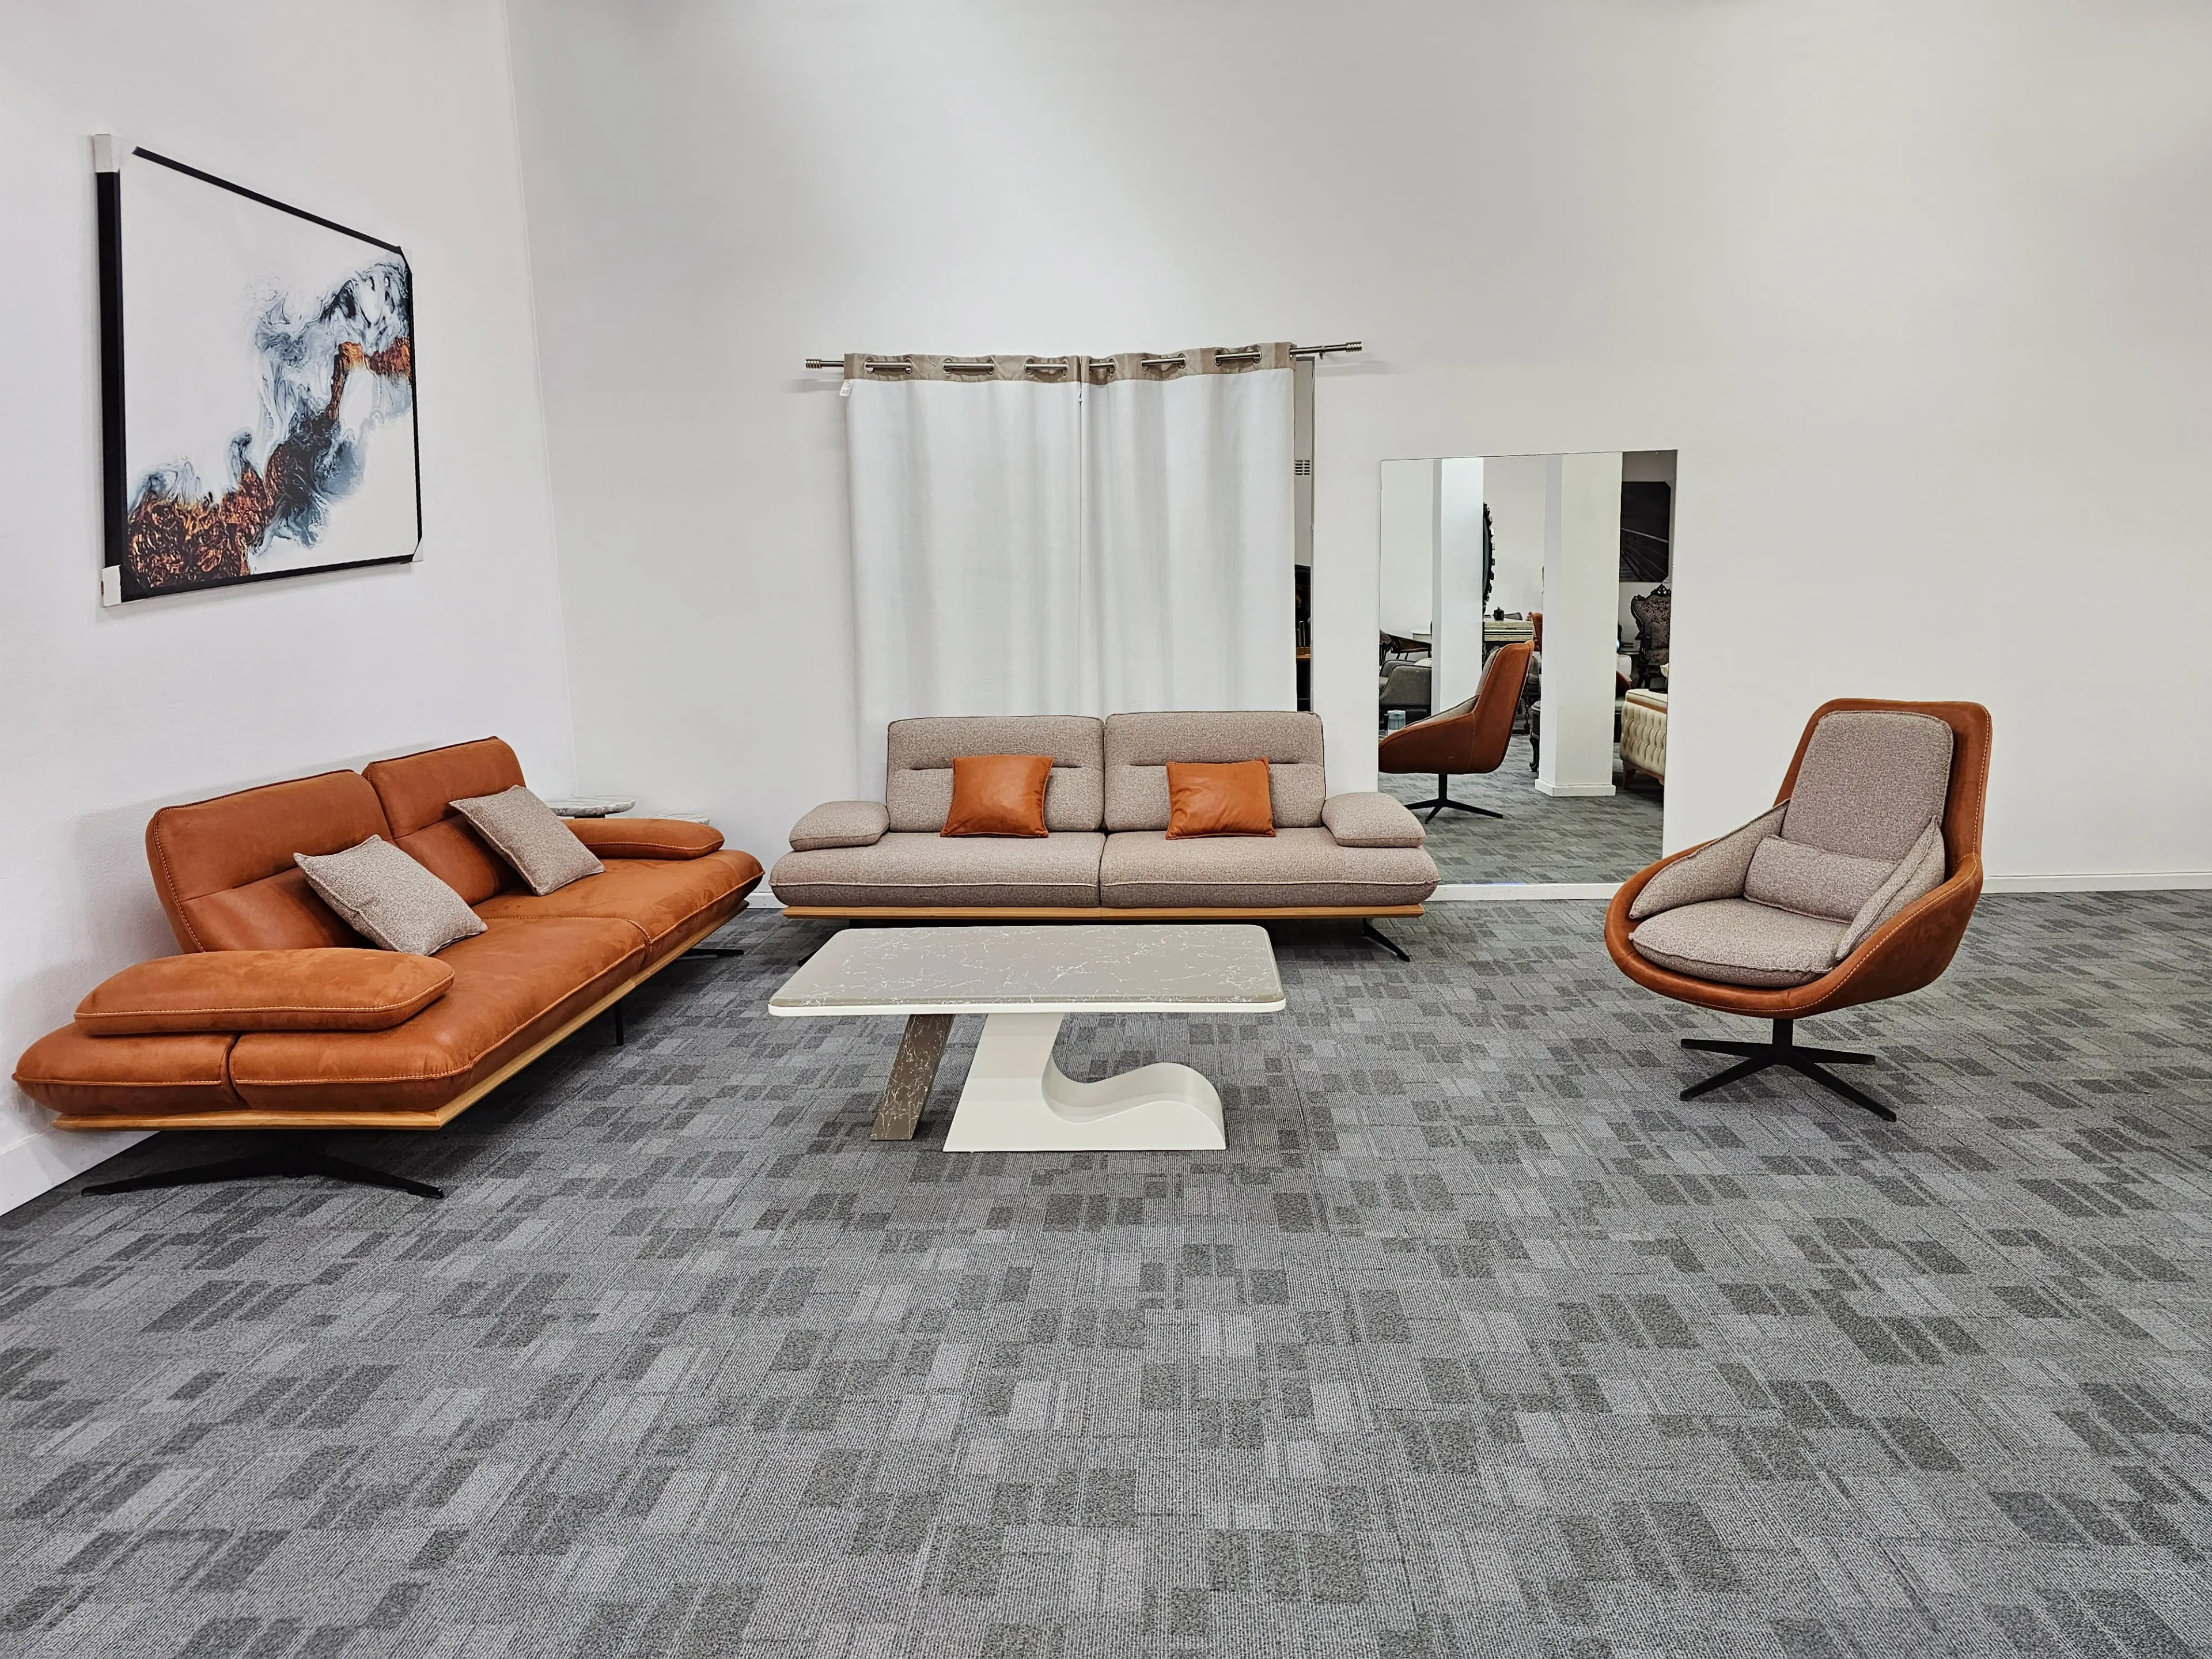 Royal- Cream and Orange Sofa Set